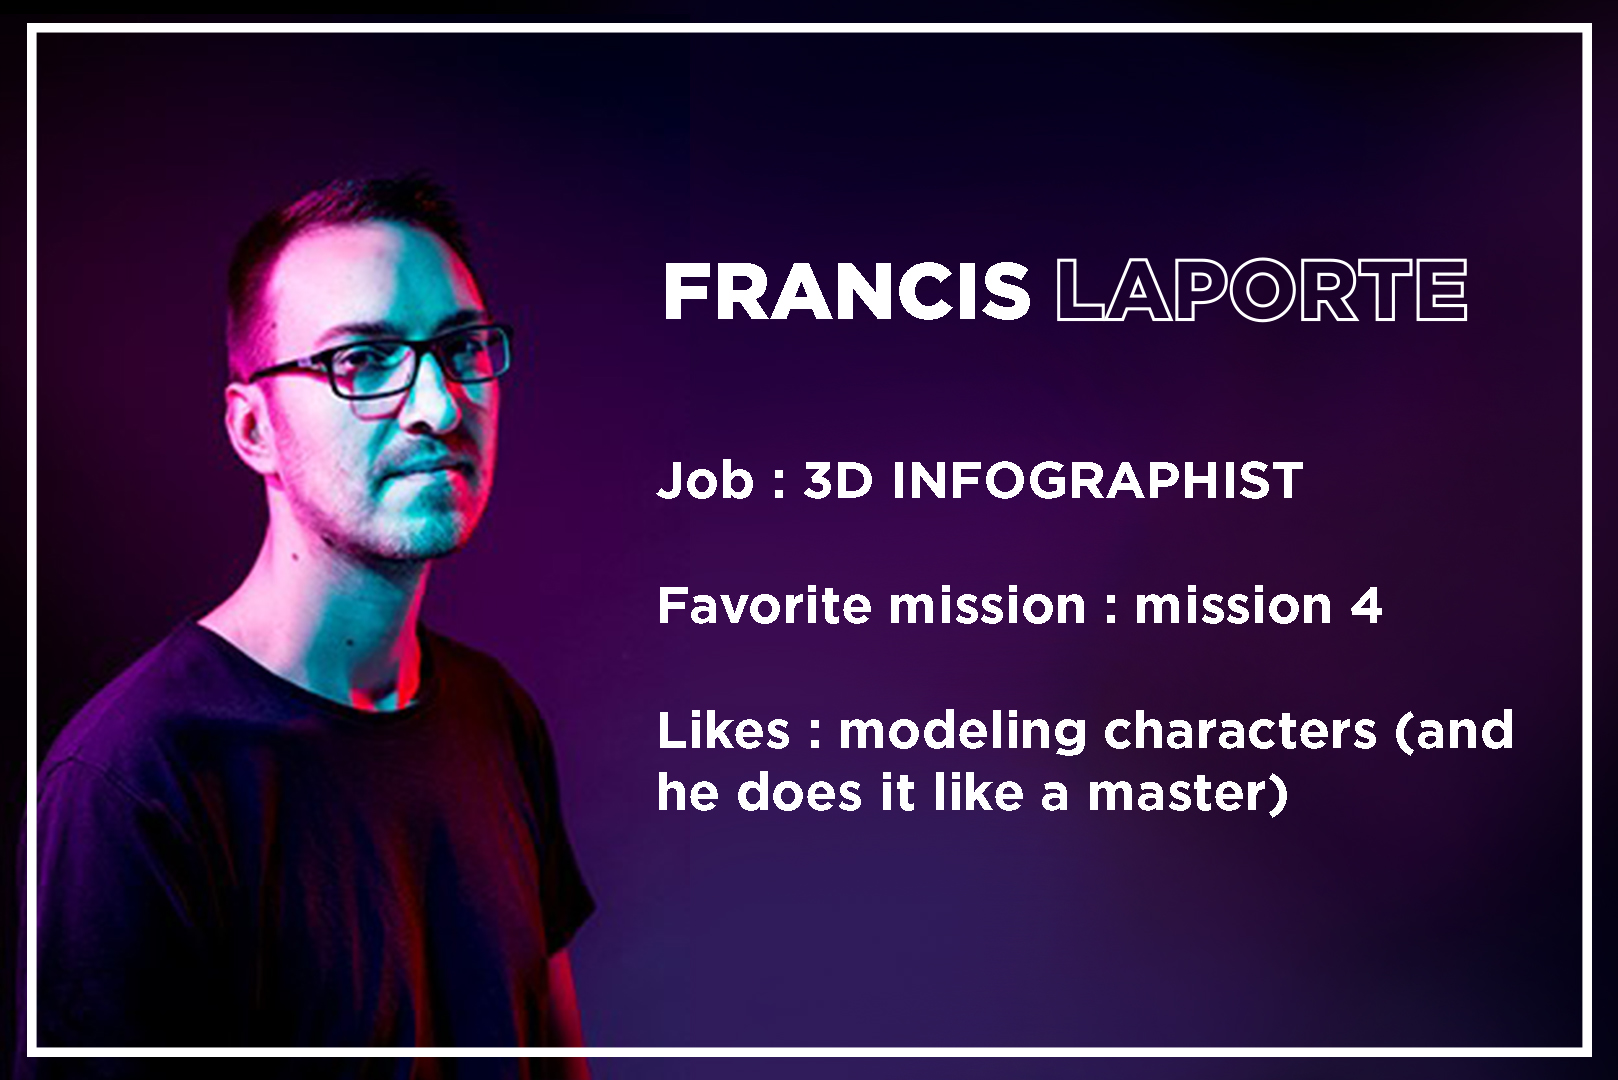 Francis Laporte 3D infographist in the game development studio